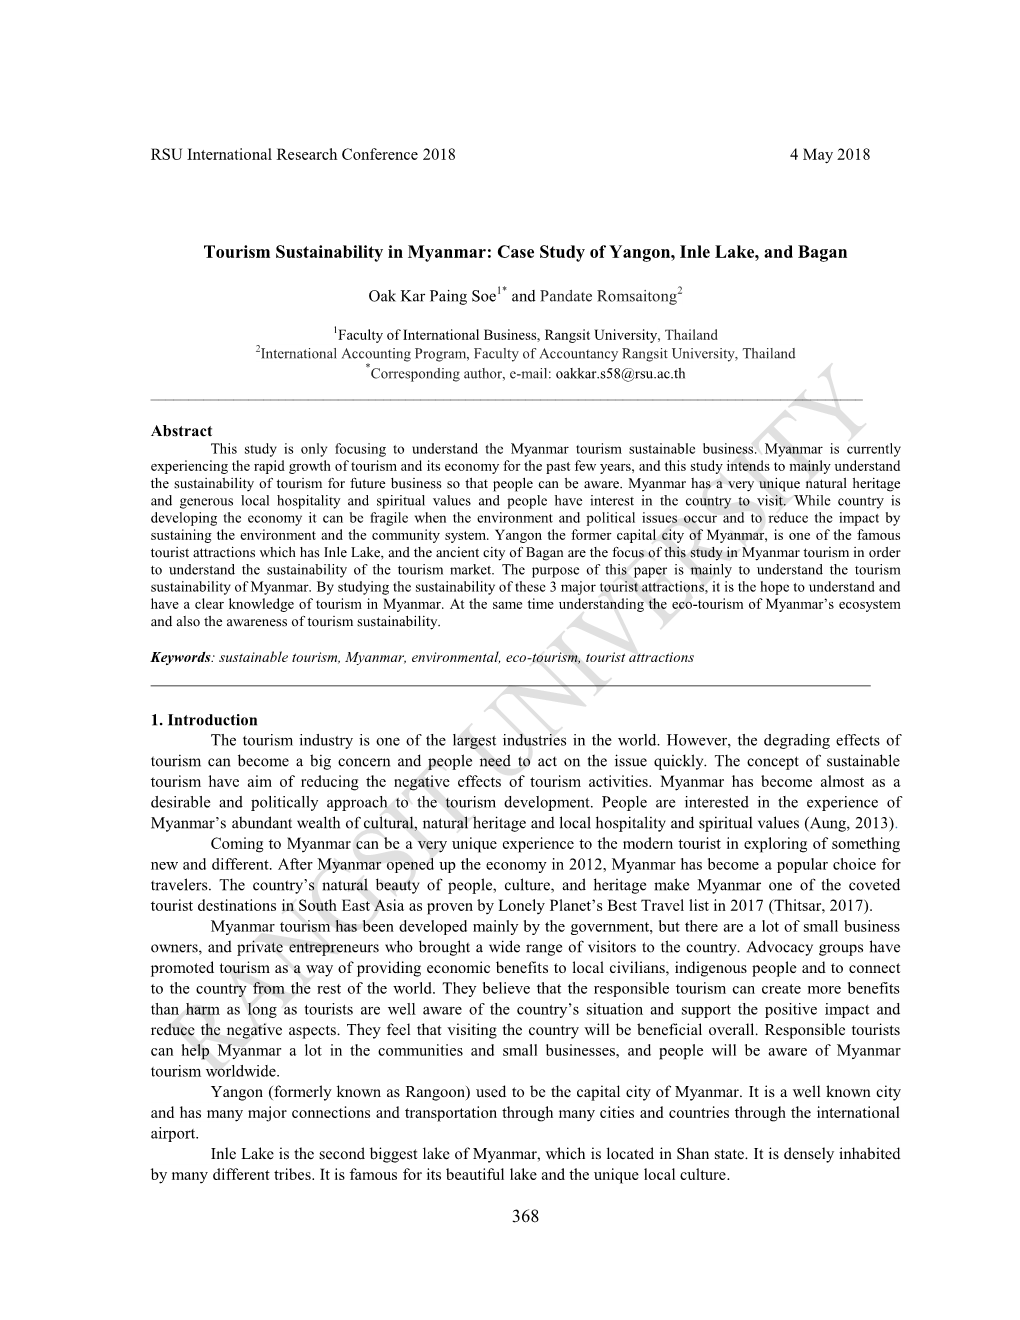 Case Study of Yangon, Inle Lake, and Bagan